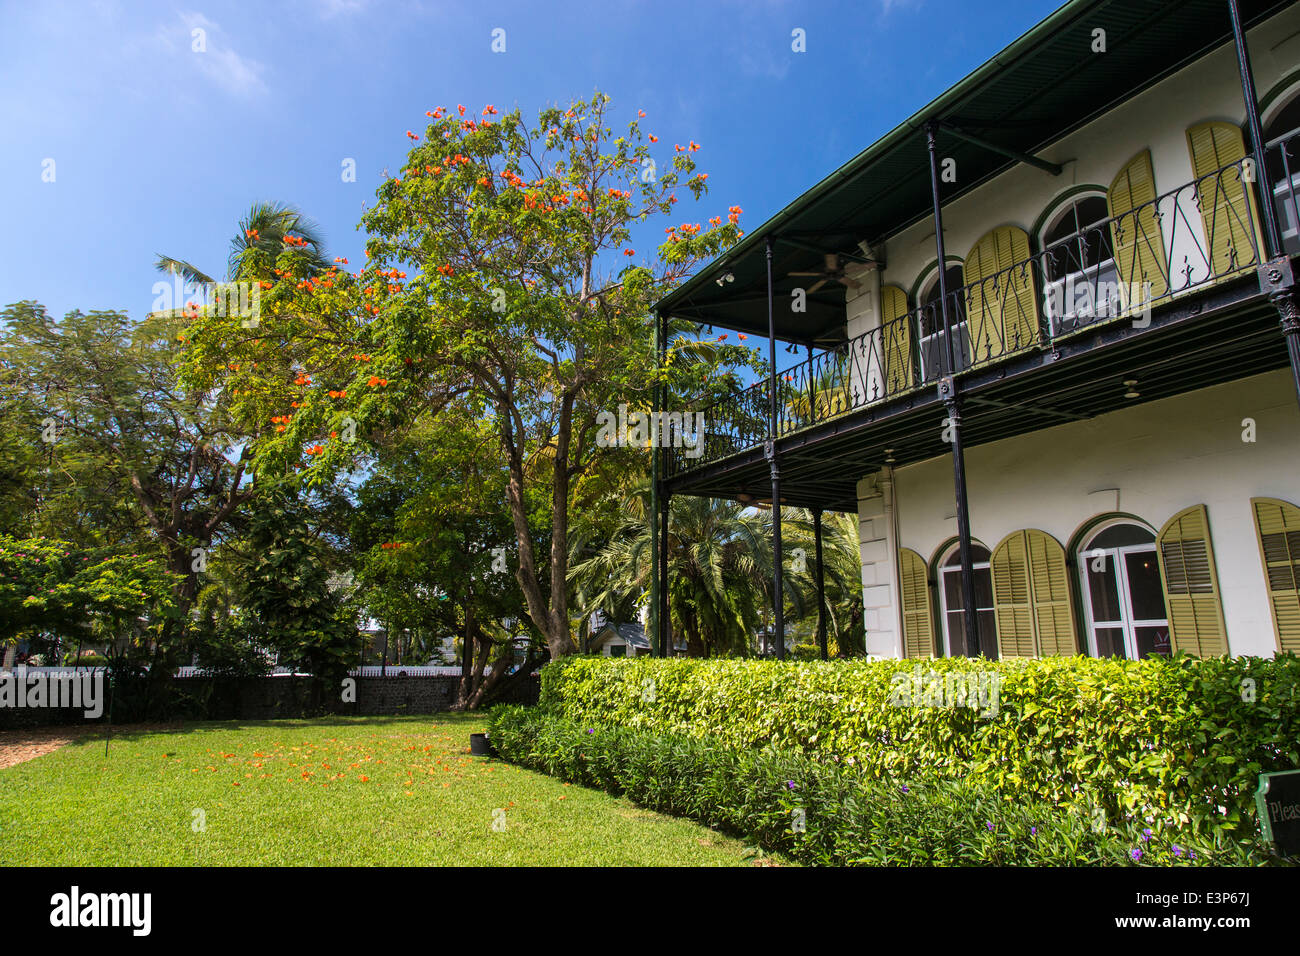 Earnest Hemingway house in Key West, Florida, USA Stock Photo